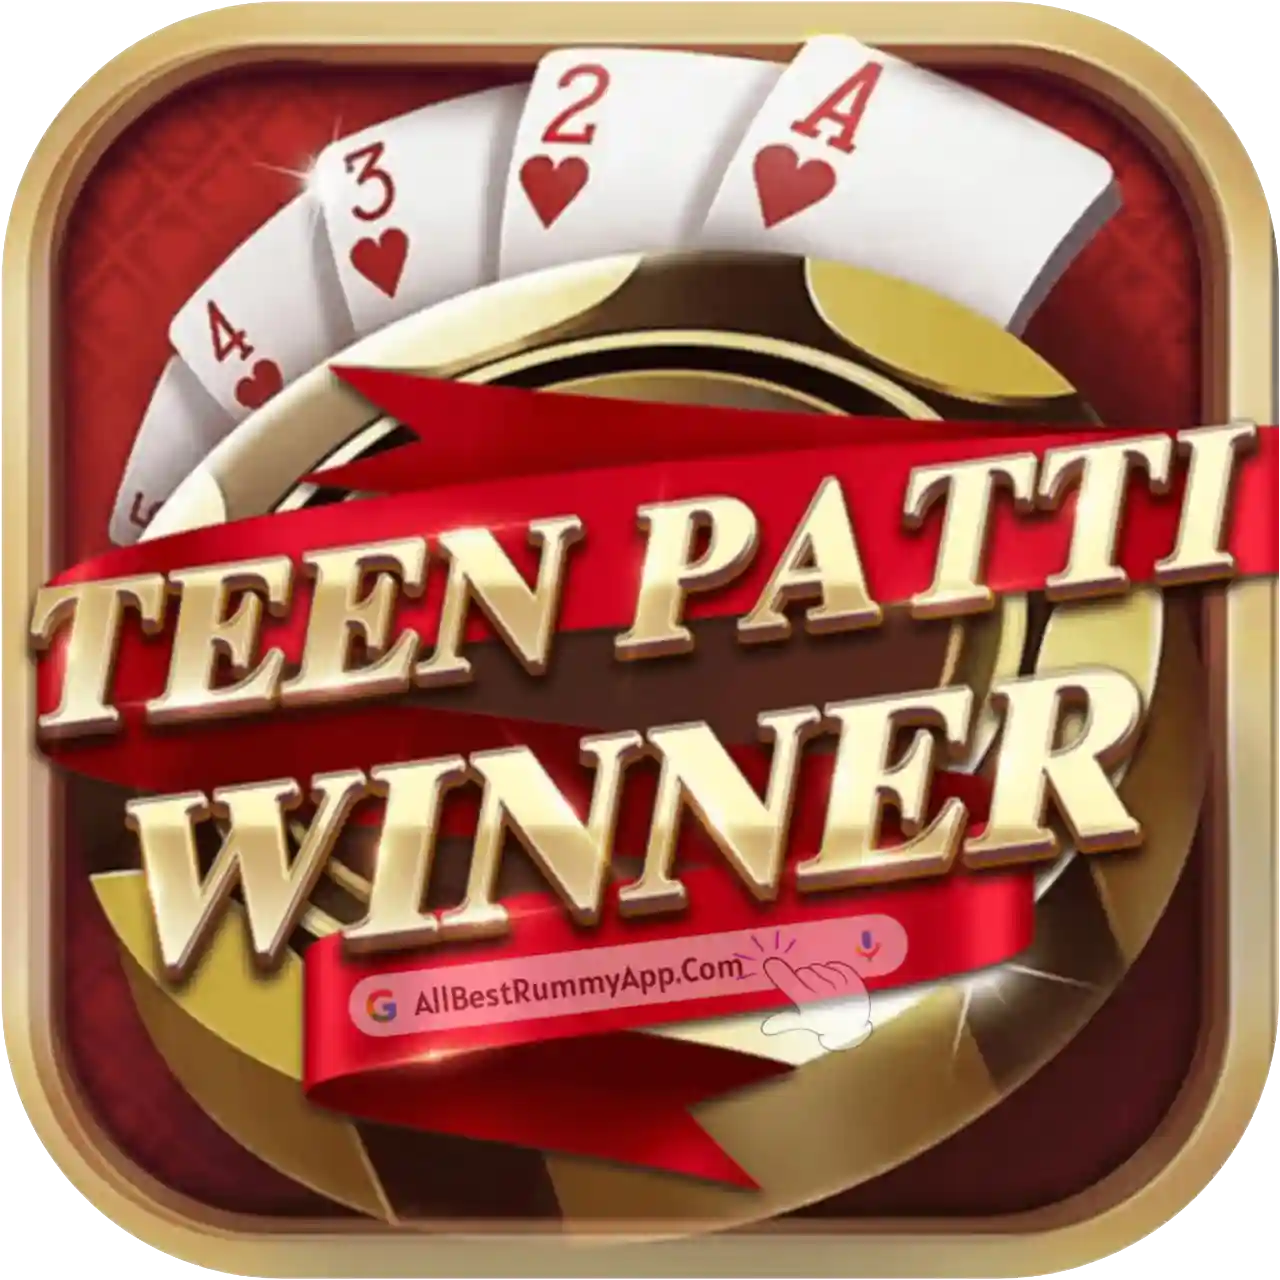 Teen Patti Winner App - India Rummy APk